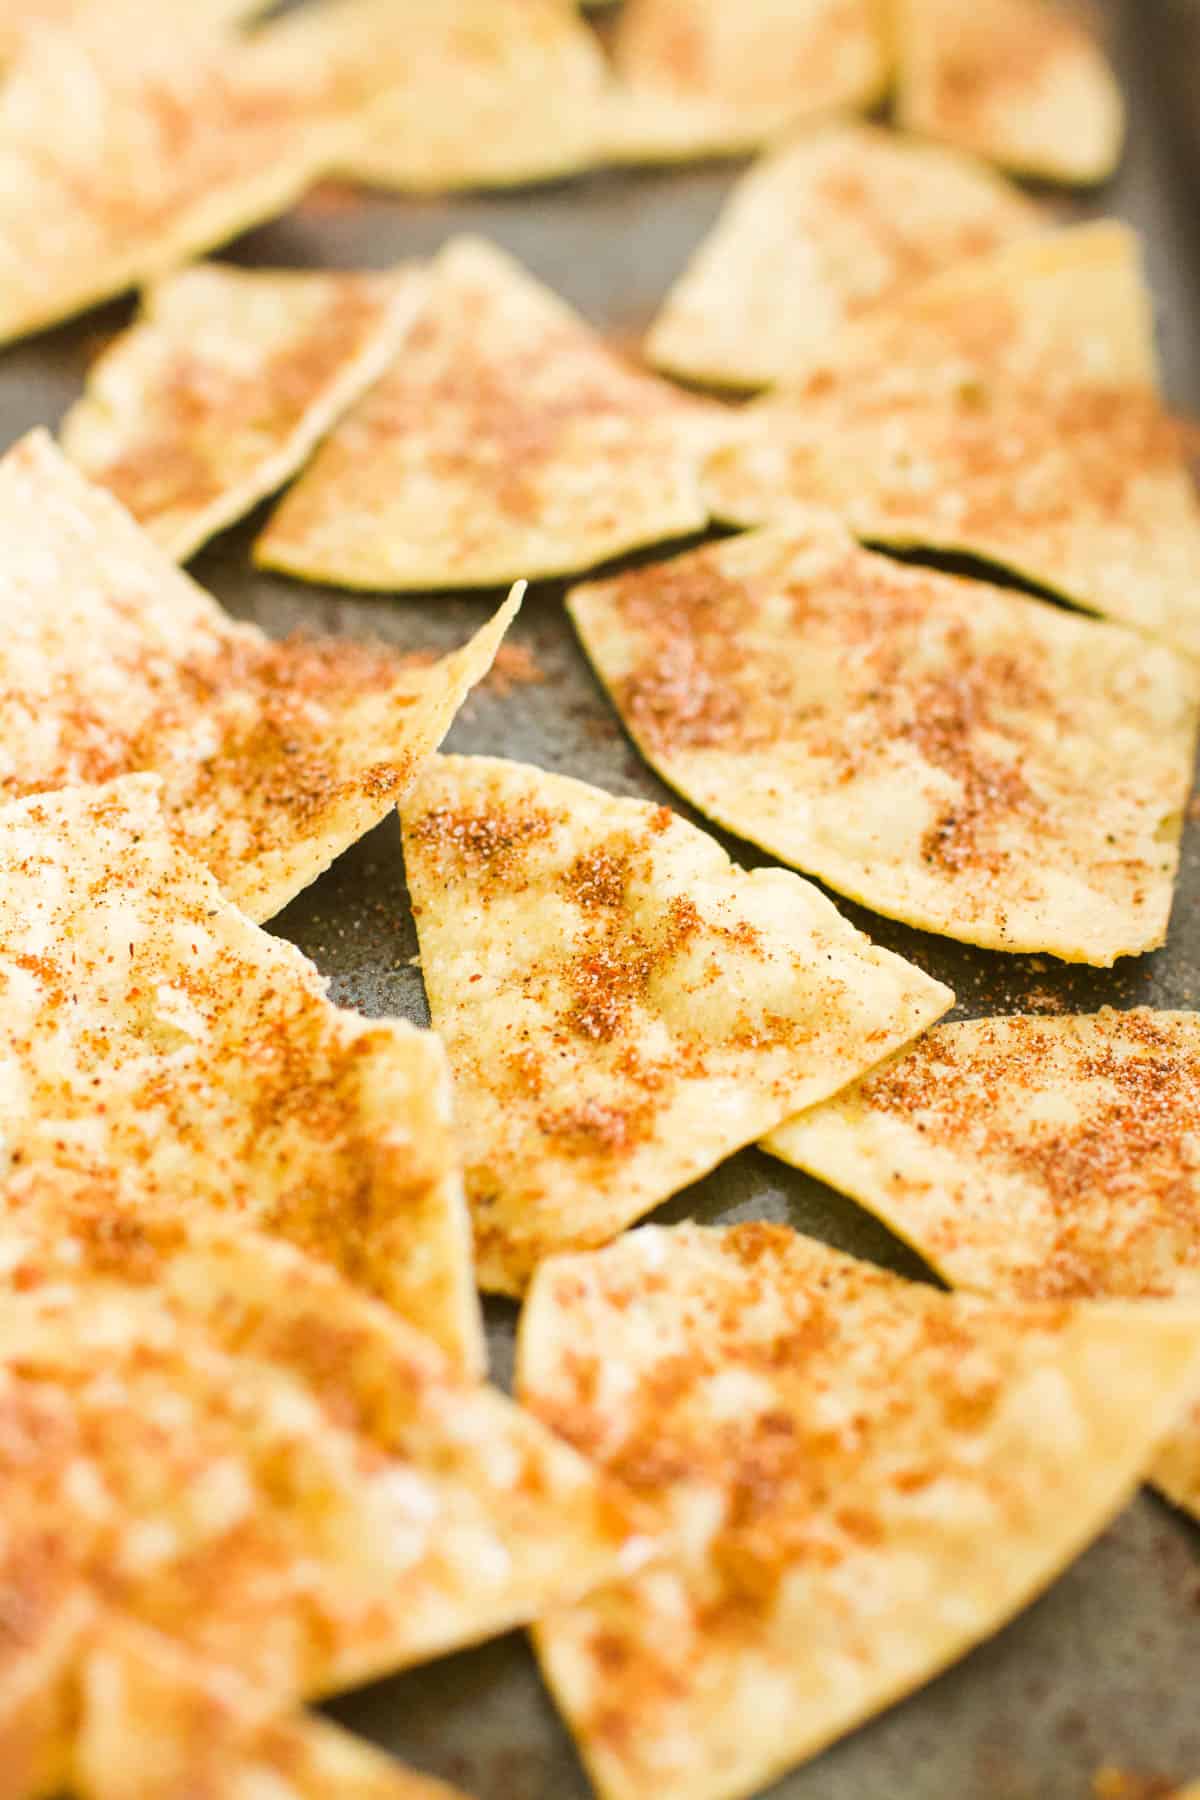 Seasoned tortilla chips on a sheet pan.